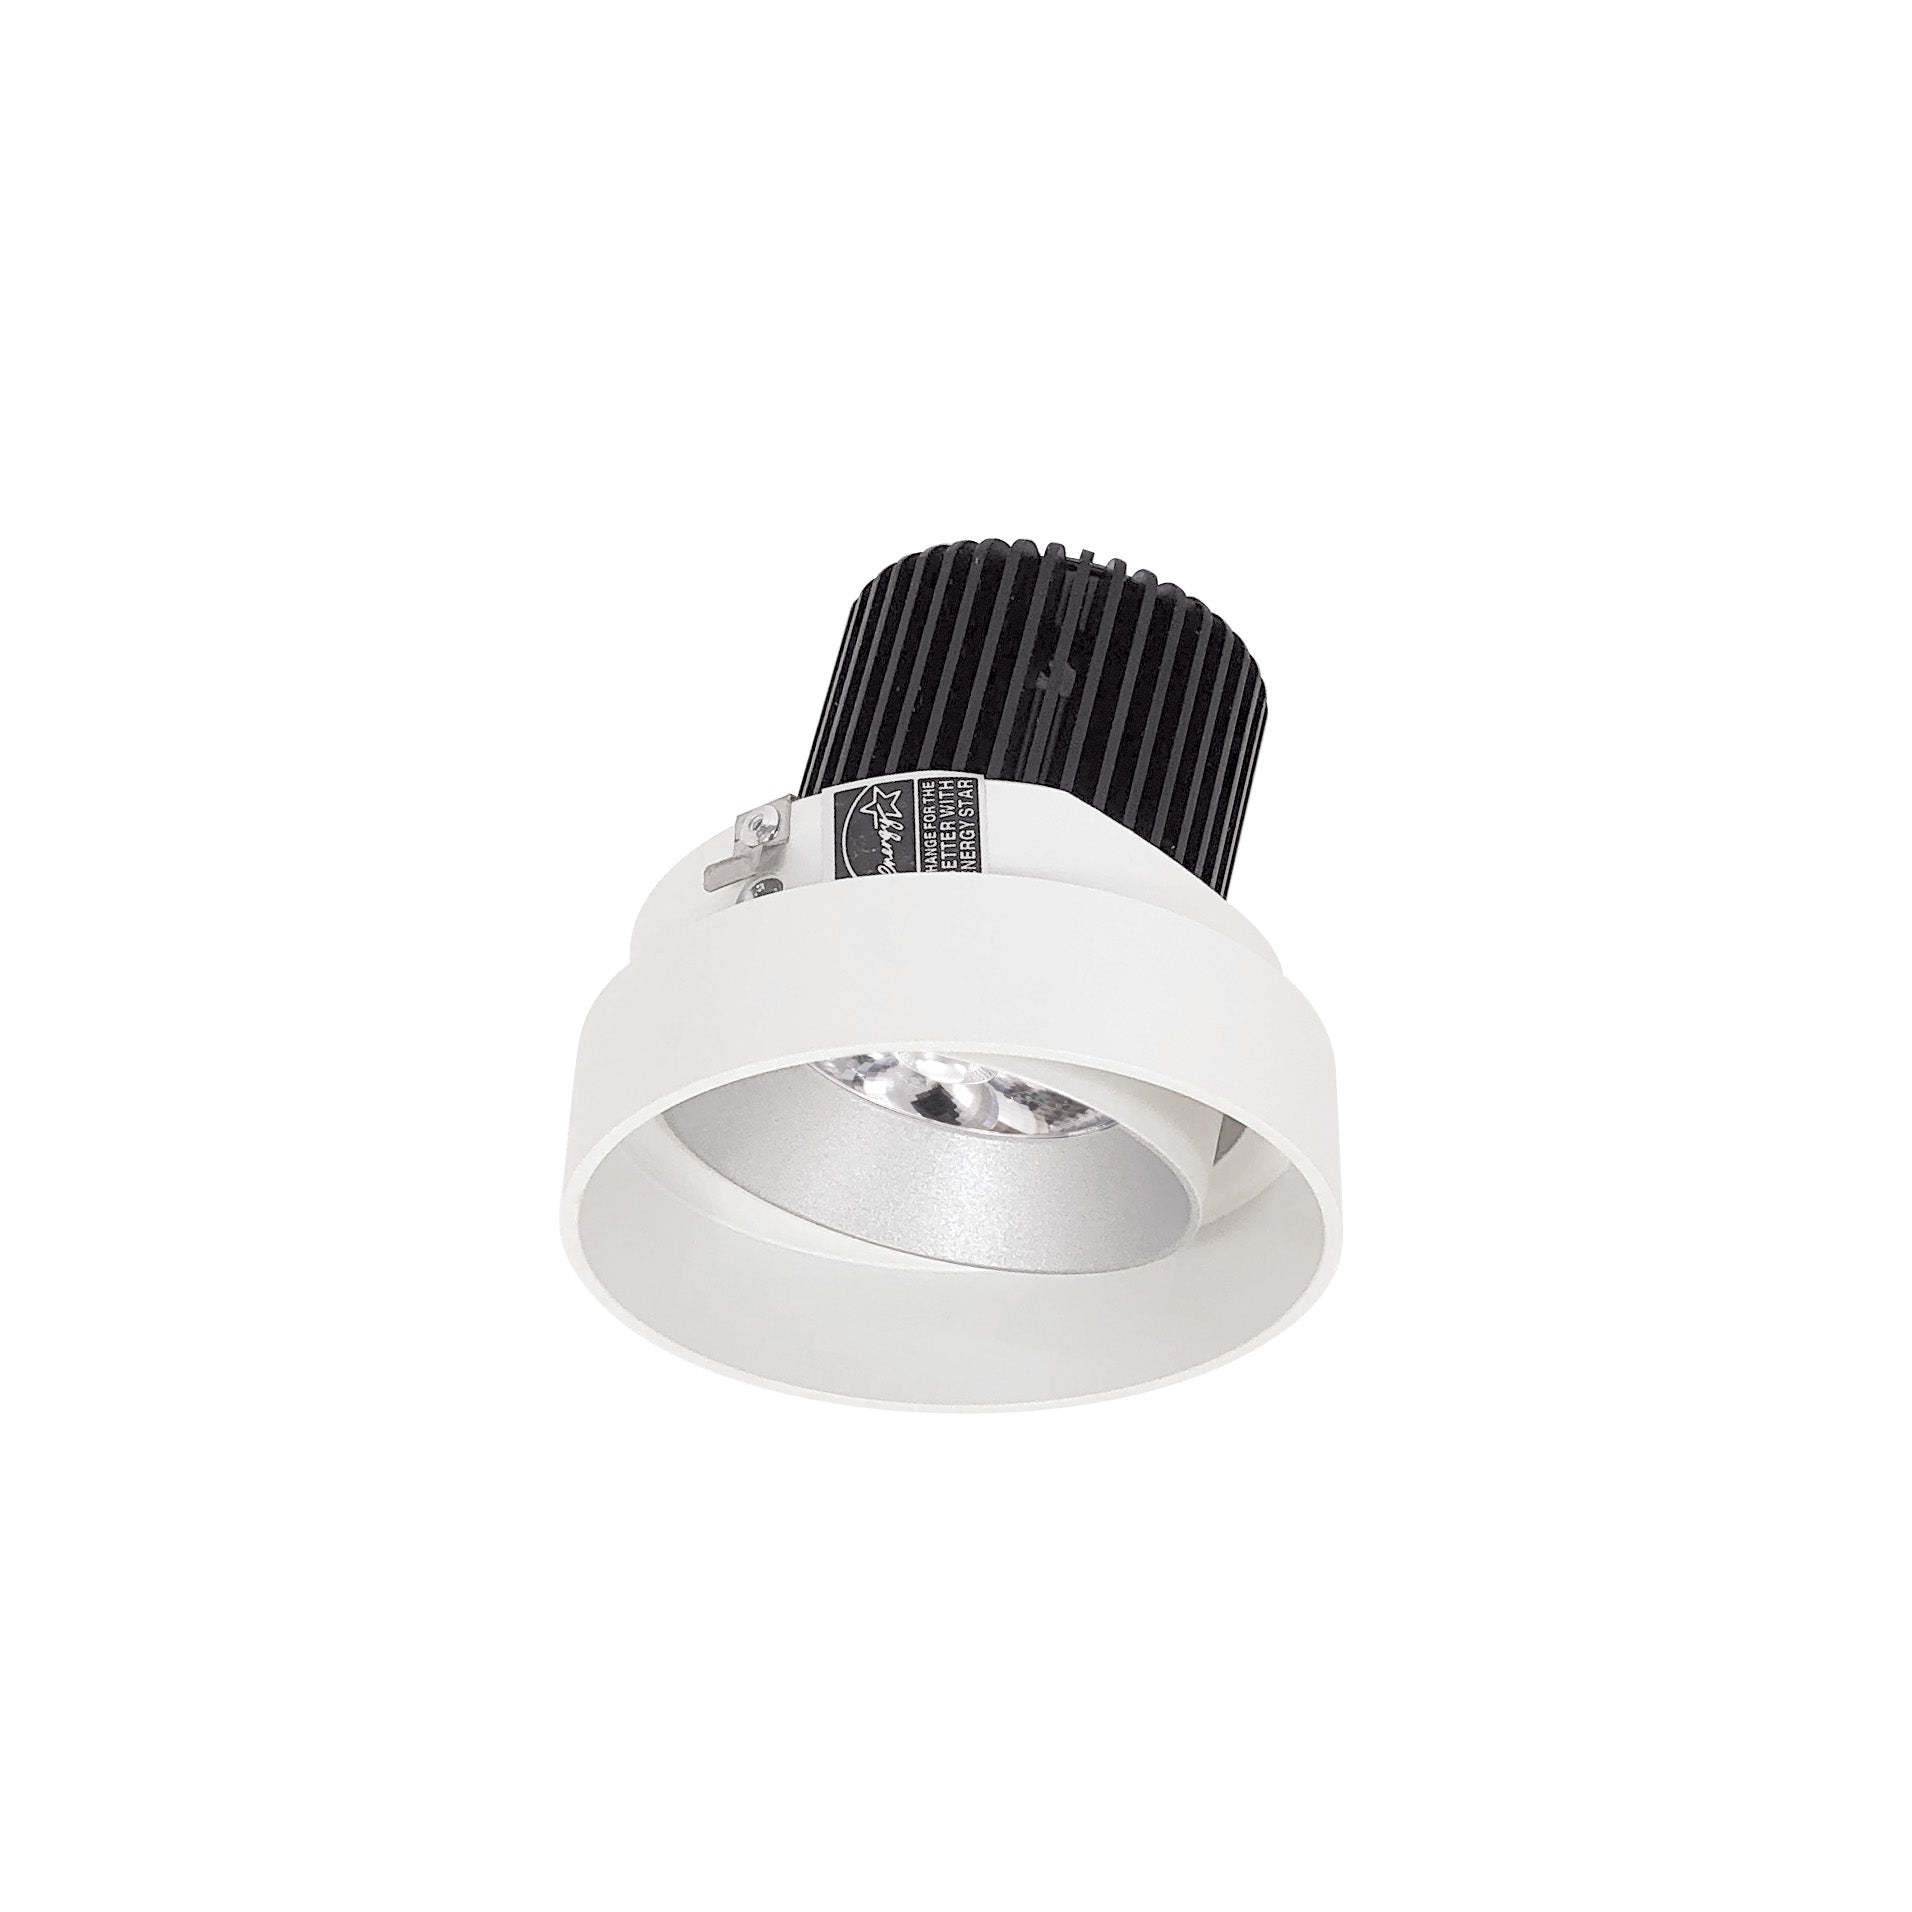 Nora Lighting NIO-4RTLA40QHW 4" Iolite LED Round Trimless Adjustable, 10-Degree Optic, 800lm / 12W, 4000K - Haze Adjustable / White Reflector